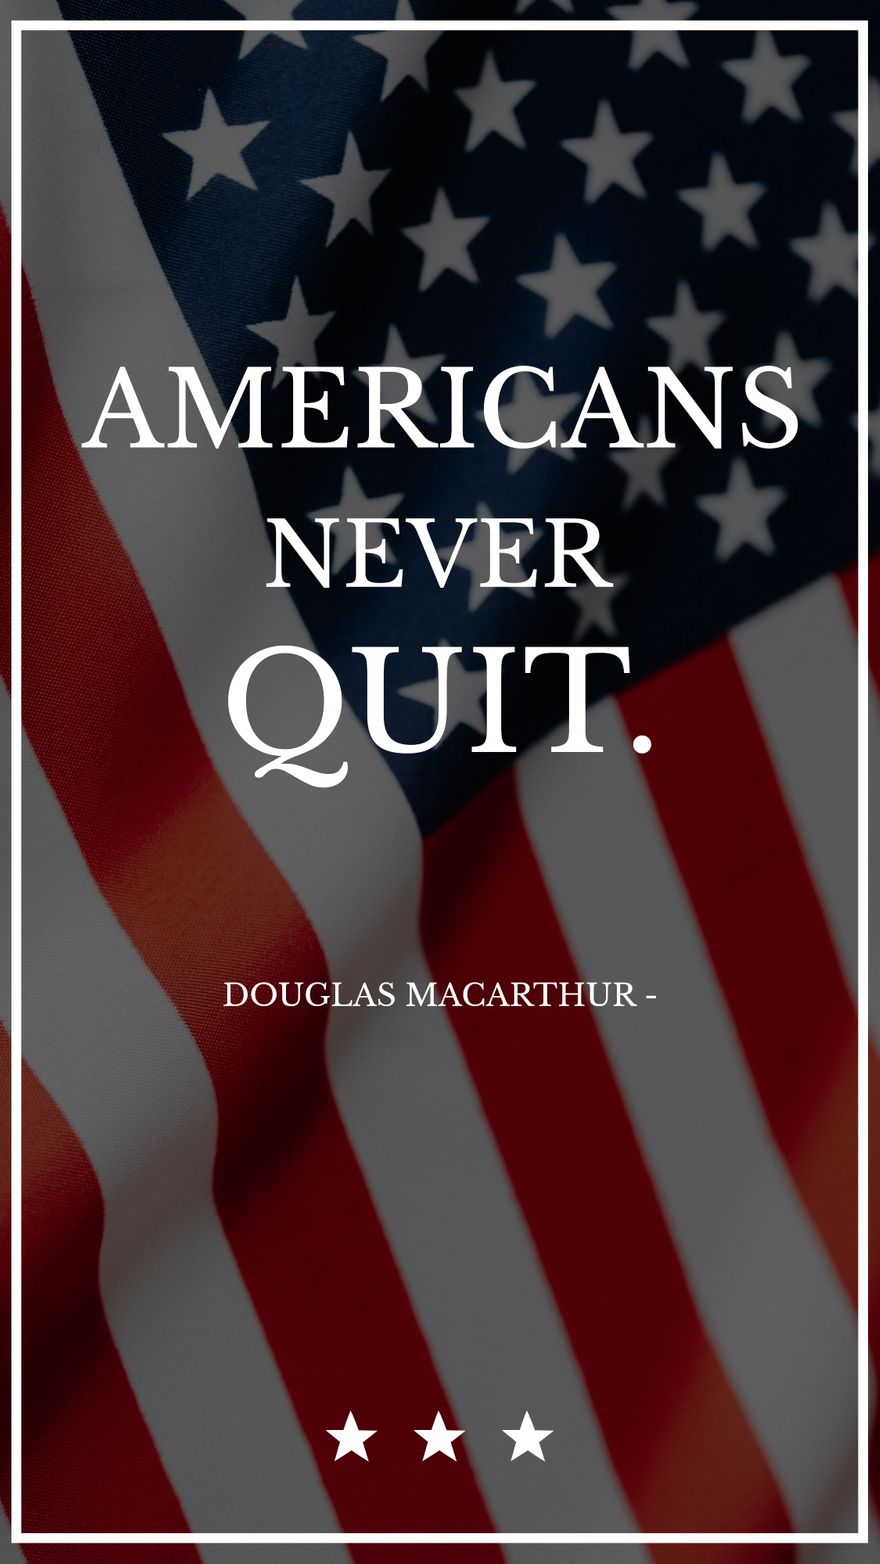 Free Douglas MacArthur - Americans never quit. in JPG